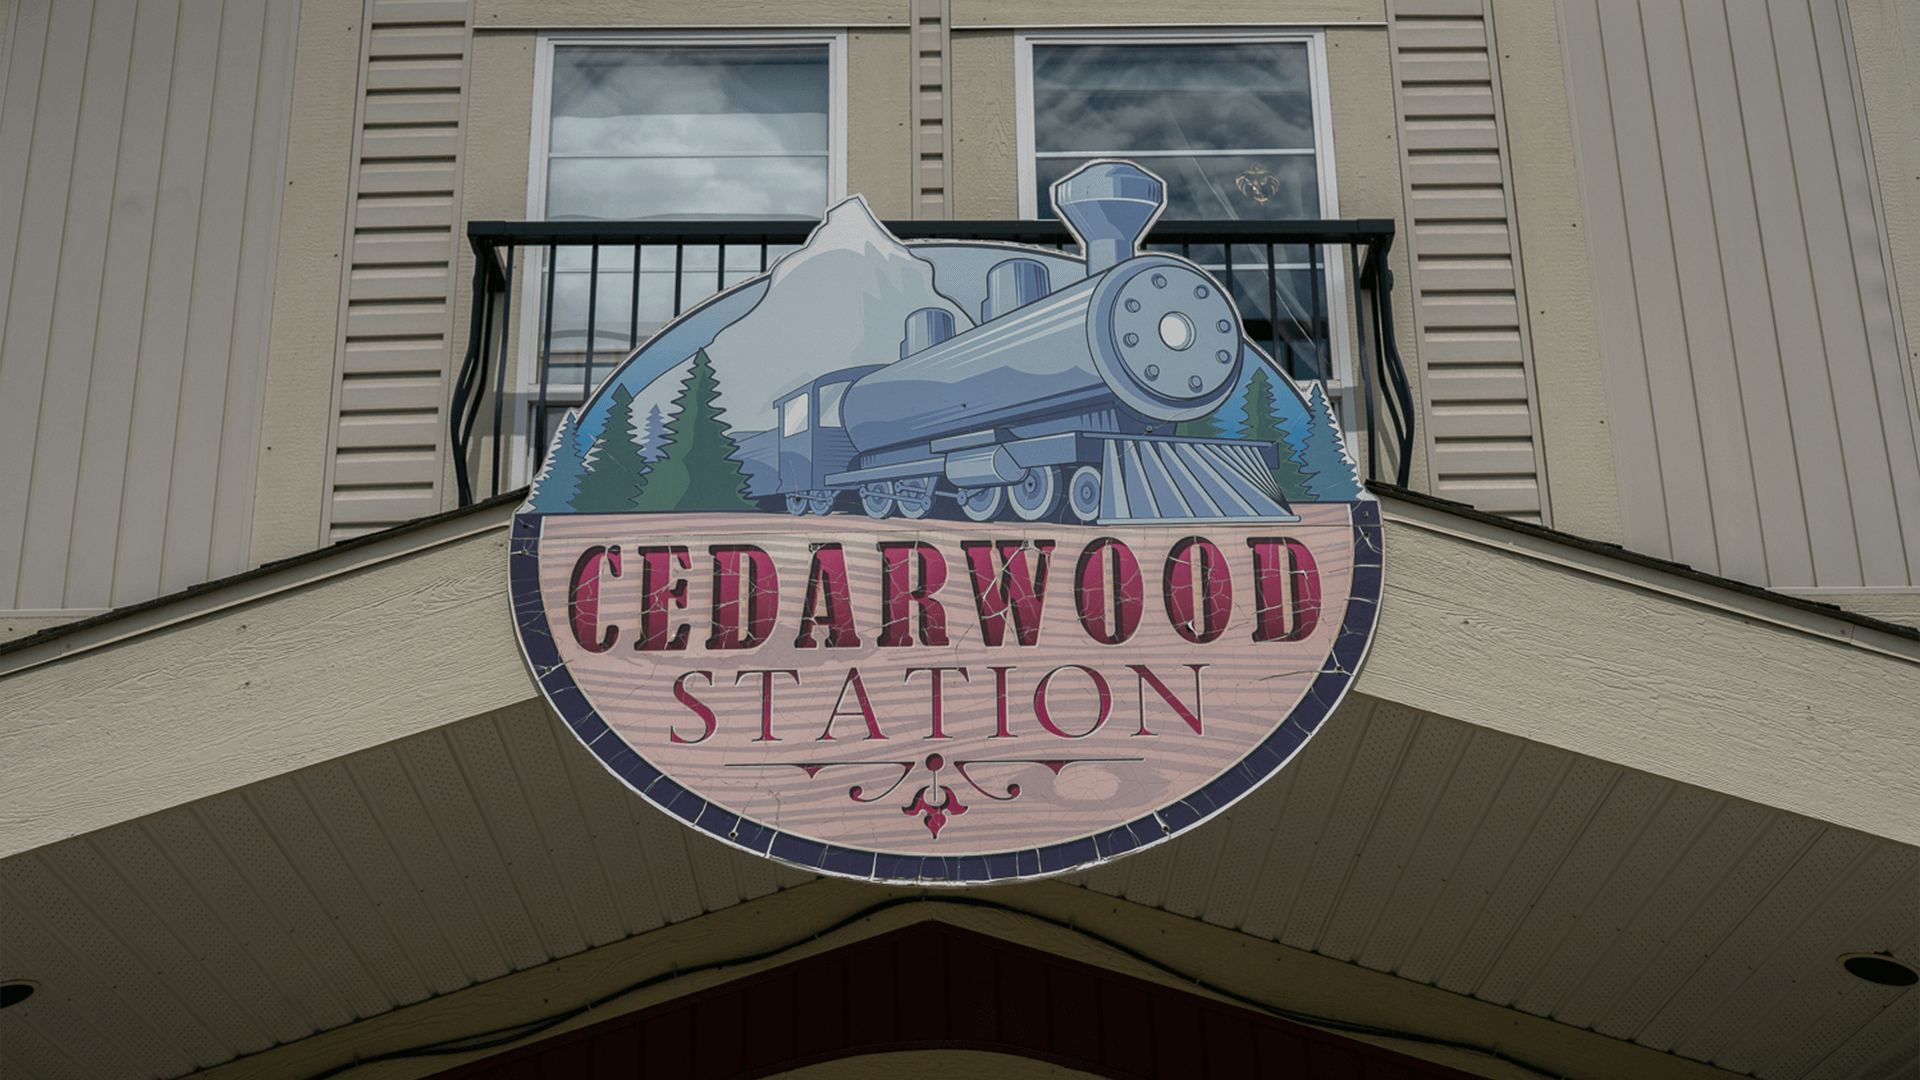 Perks of Living at Cedarwood Station